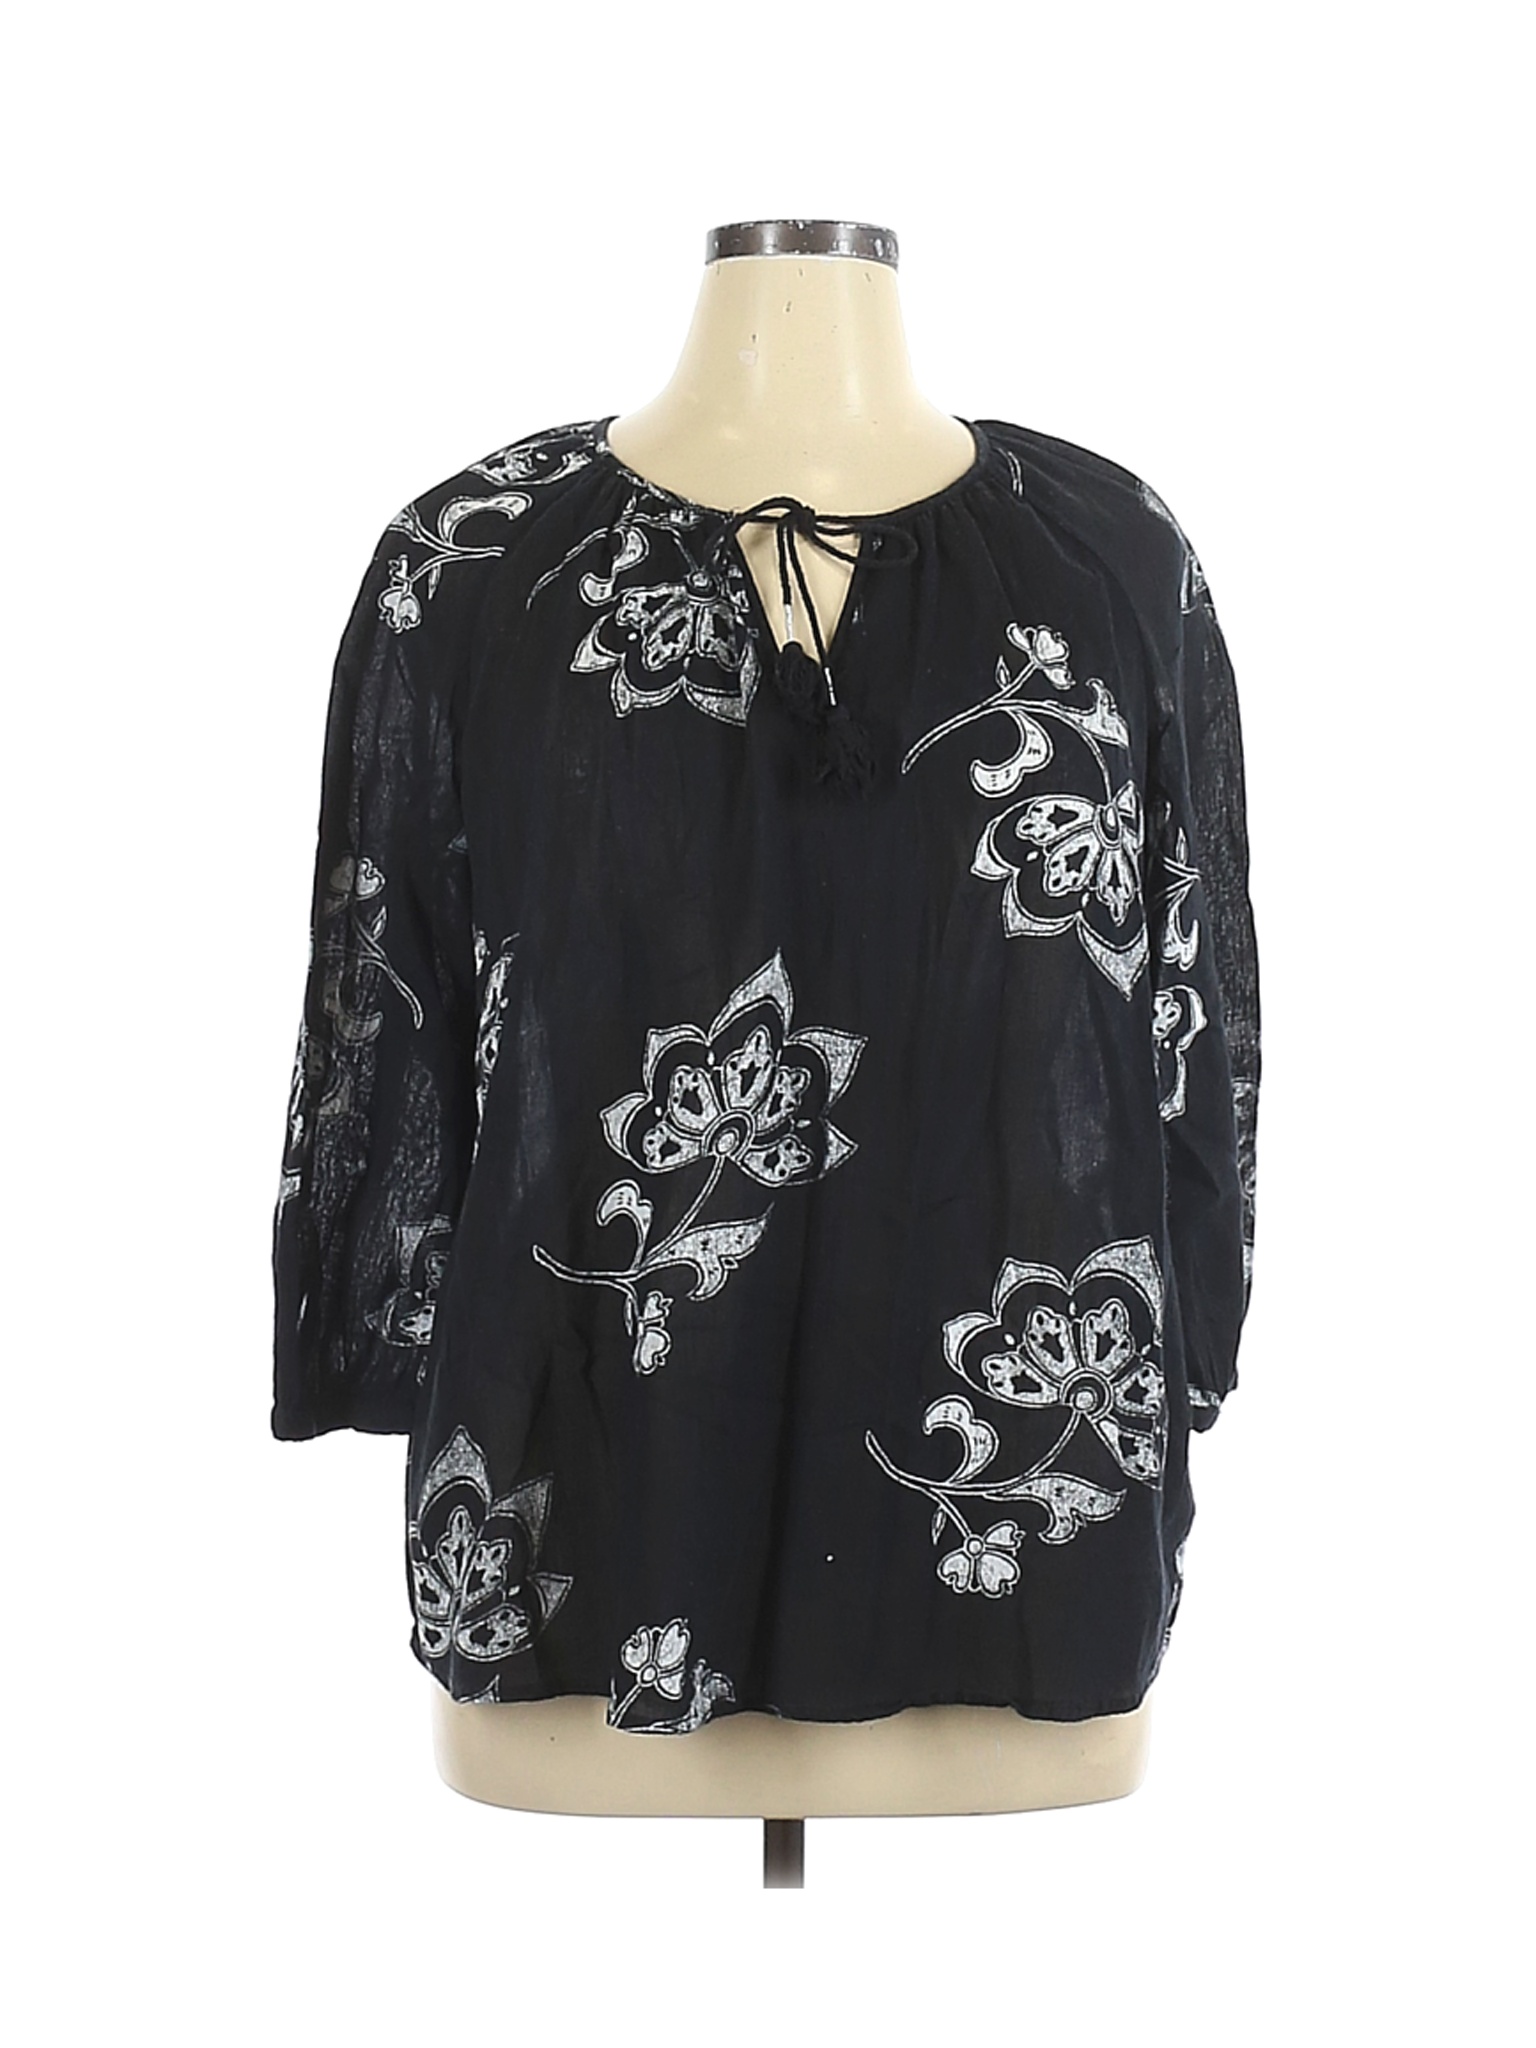 Merona Women Black Long Sleeve Blouse XL | eBay